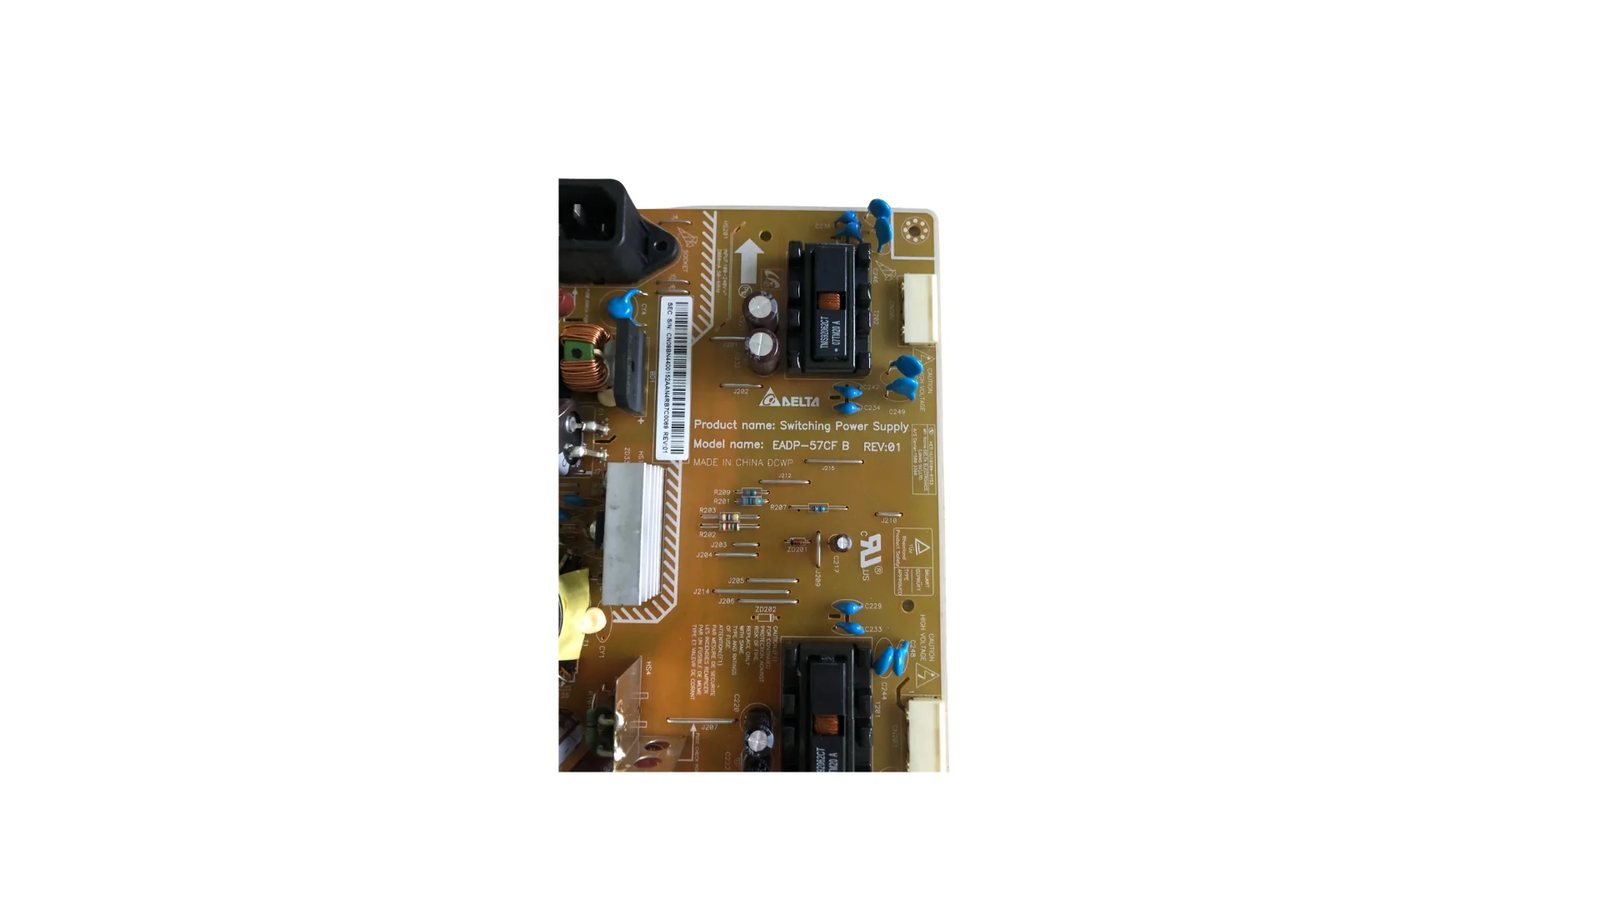 BN44-00152A EADP-57CF B power supply for Samsung 225MW monitor